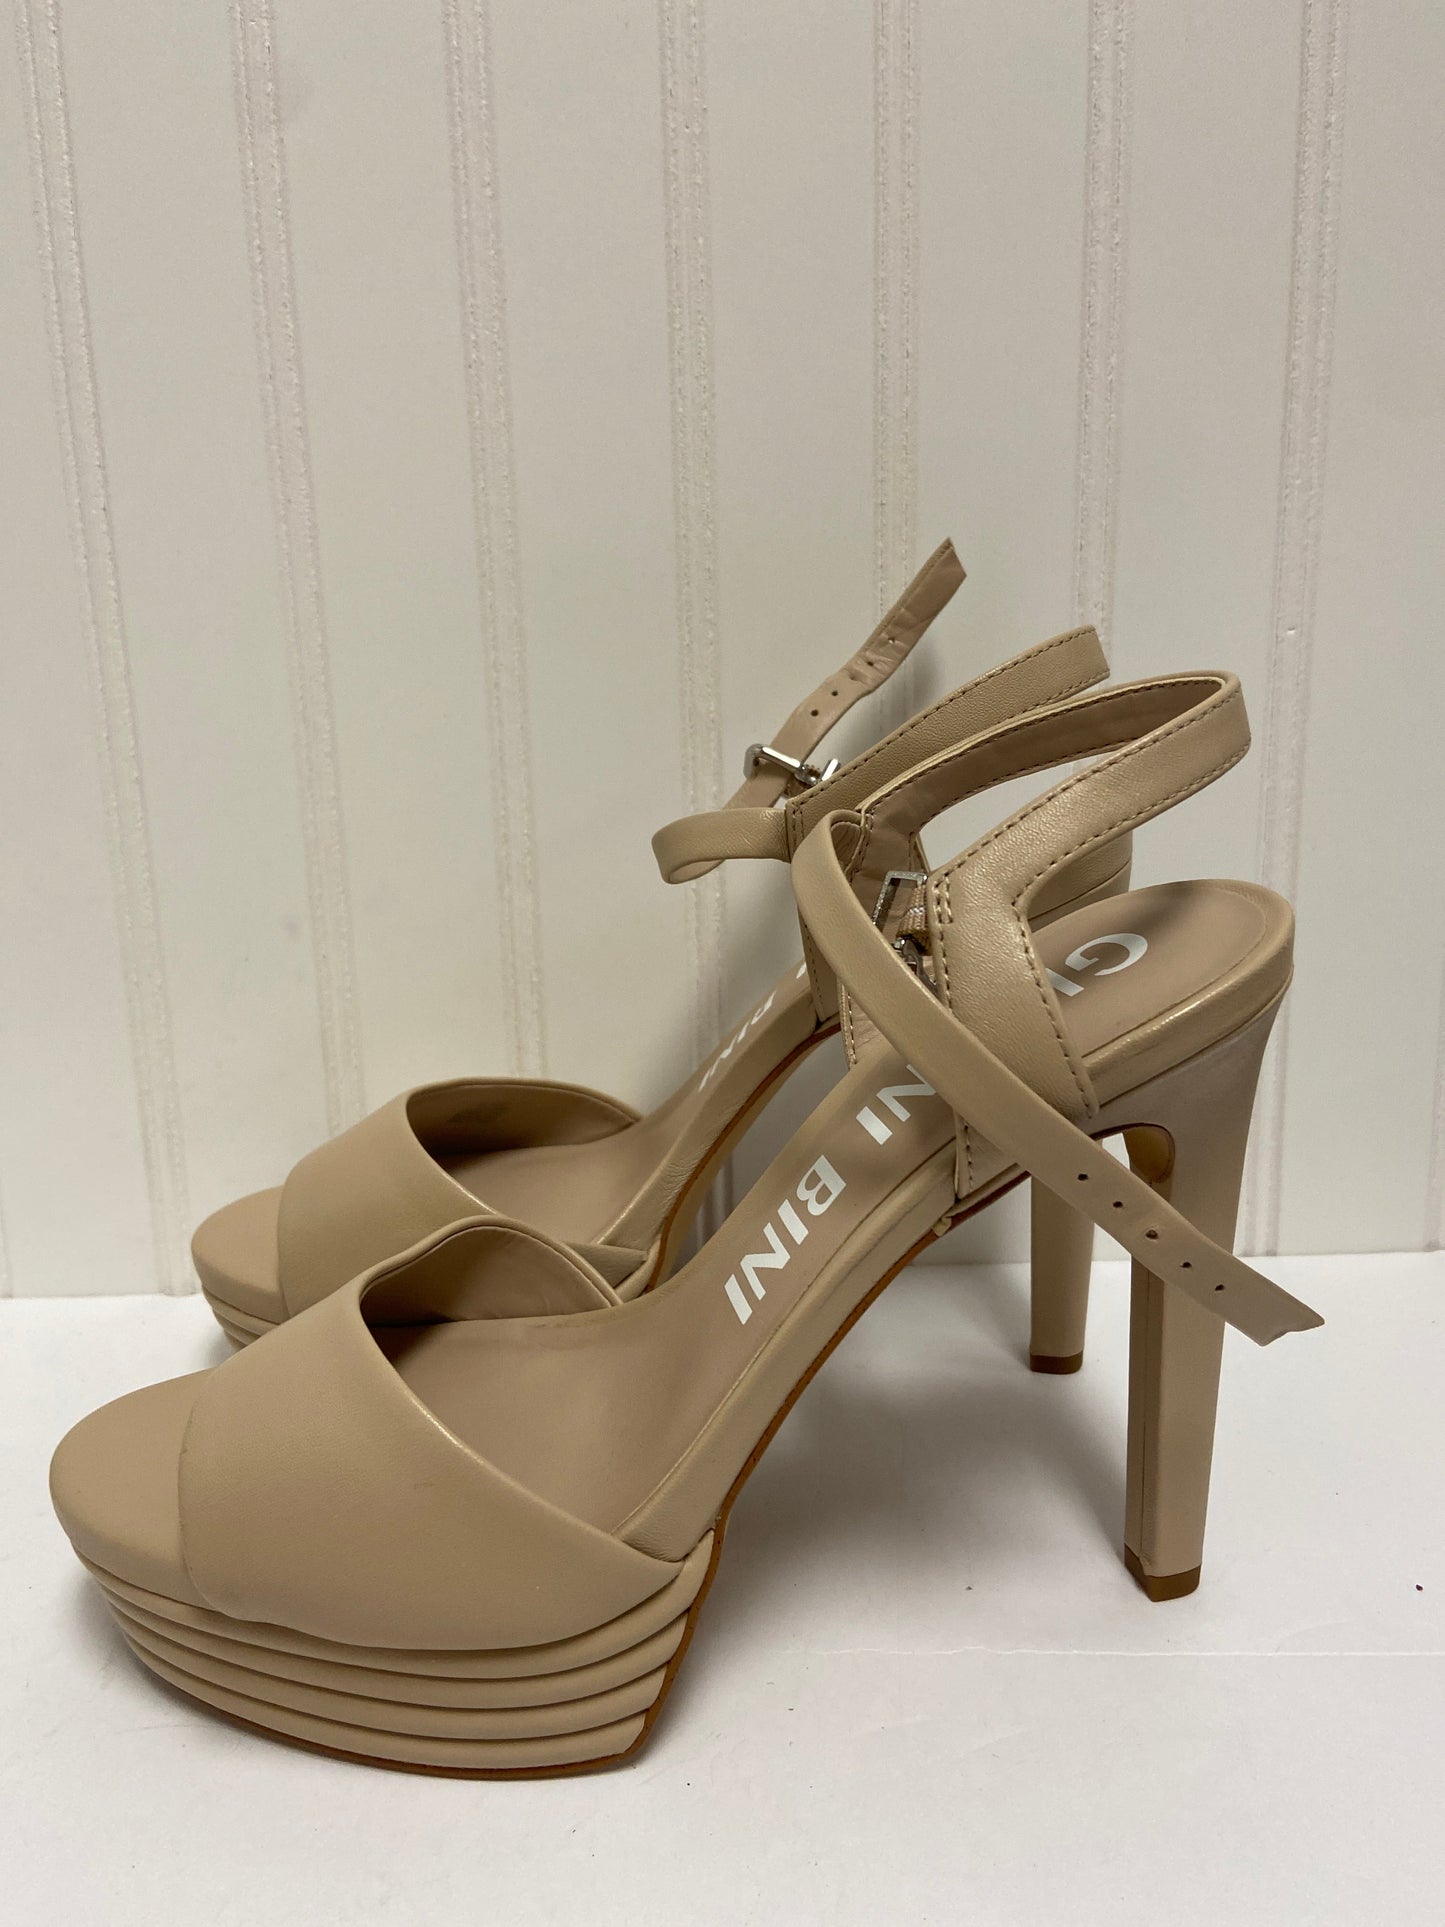 Shoes Heels Stiletto By Gianni Bini  Size: 9.5